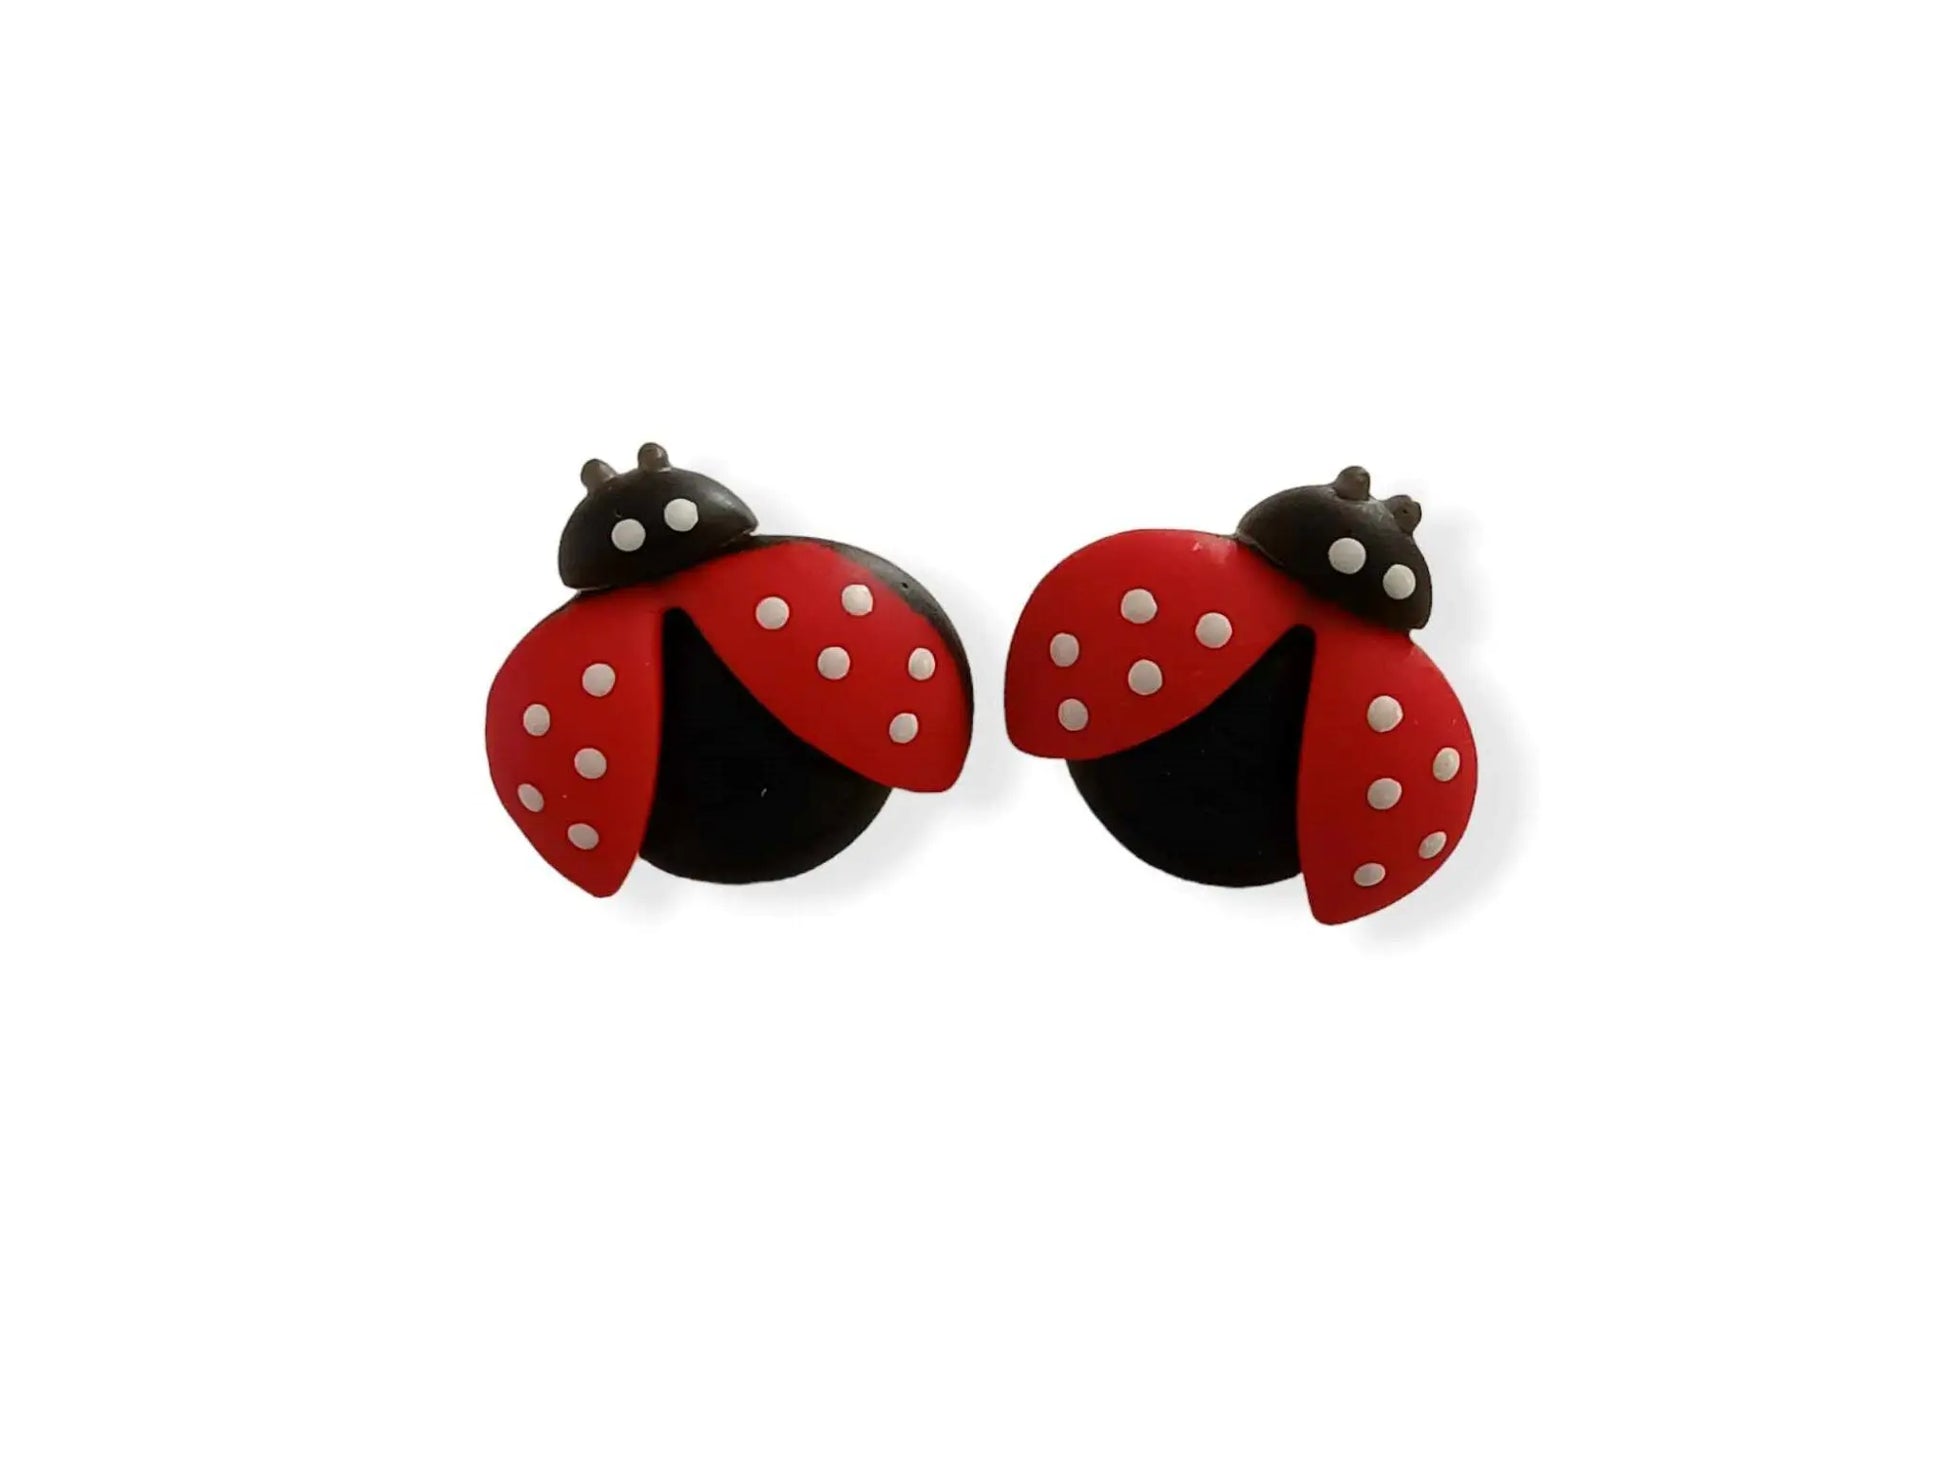 Charming Ladybird Resin Earrings - A Novelty Delight!